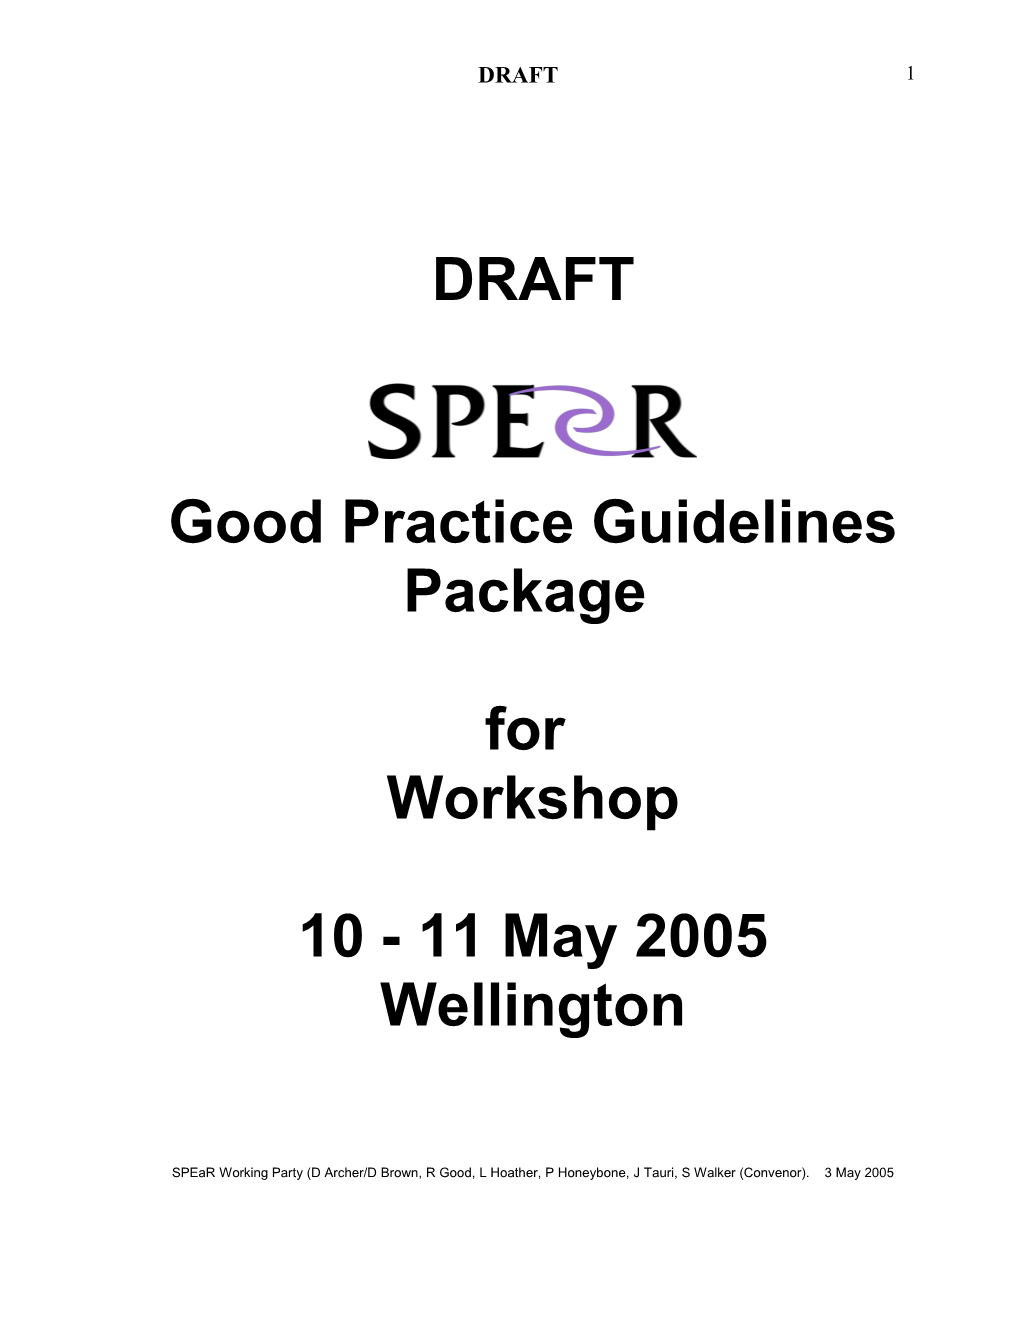 Good Practice Guidelines Package